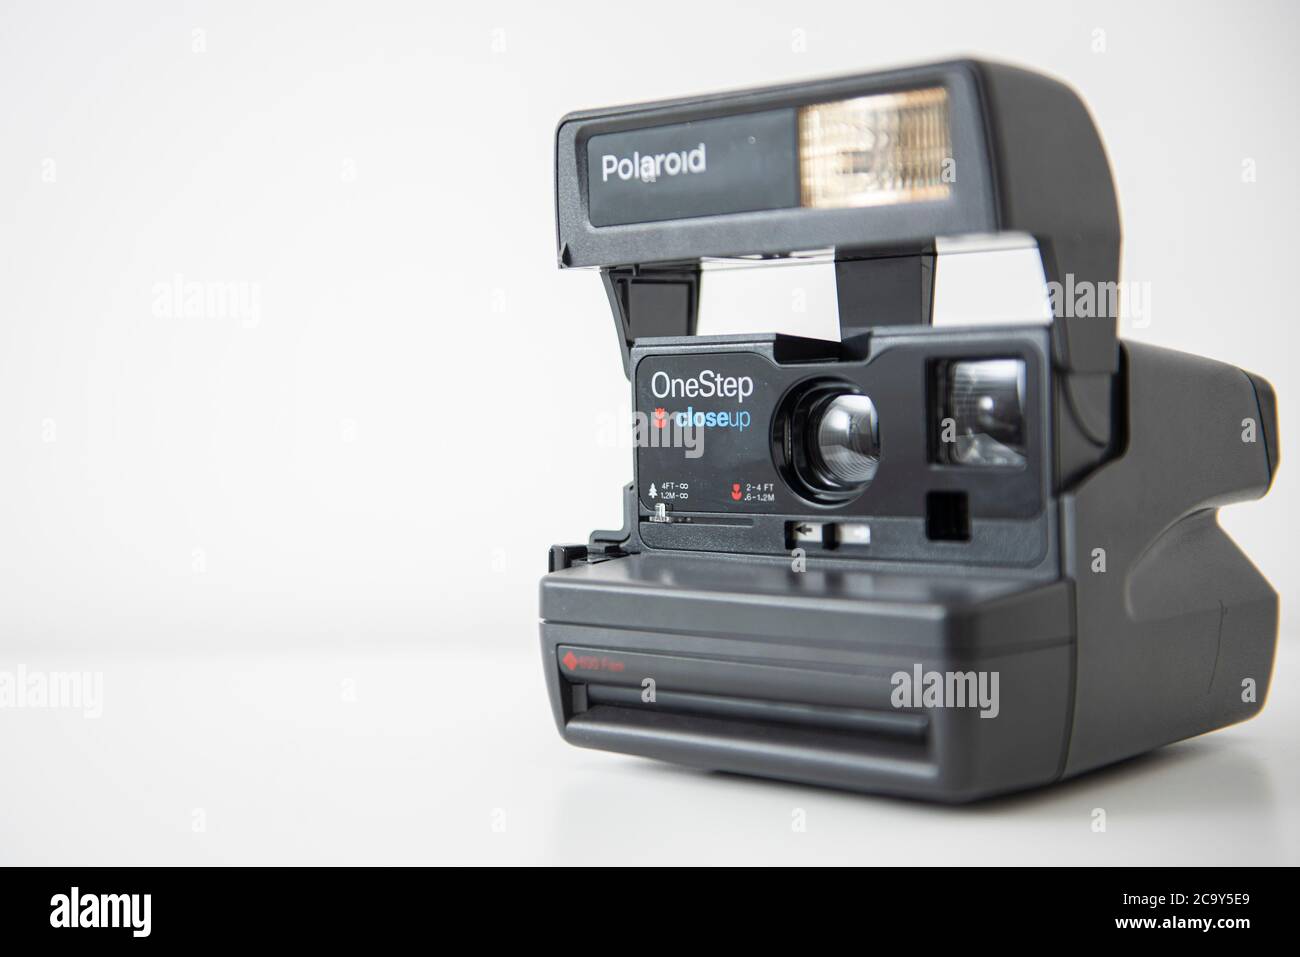 Una telecamera Polaroid One Step Close up 600 Instant Film Foto stock -  Alamy